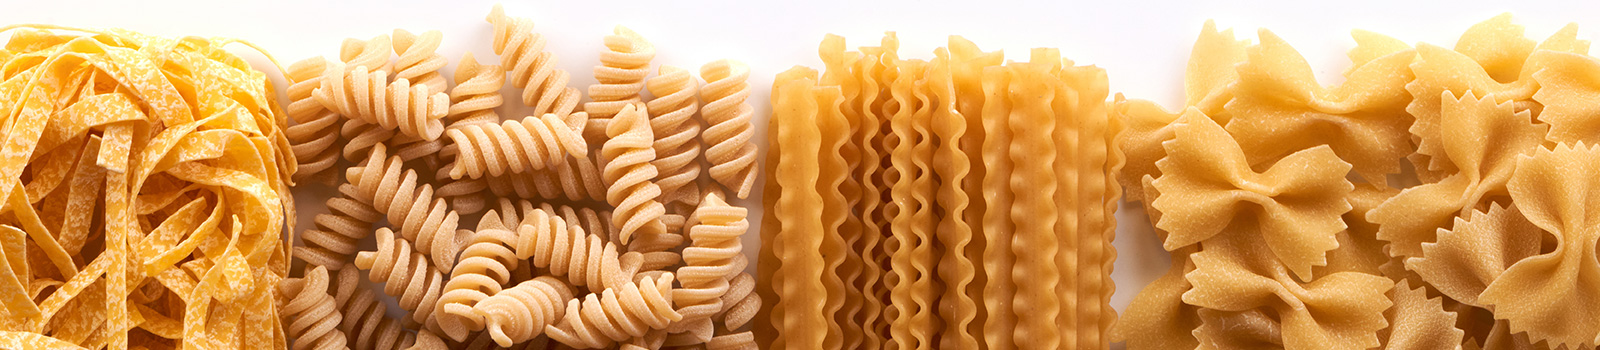 les differents formats de pâtes italiennes